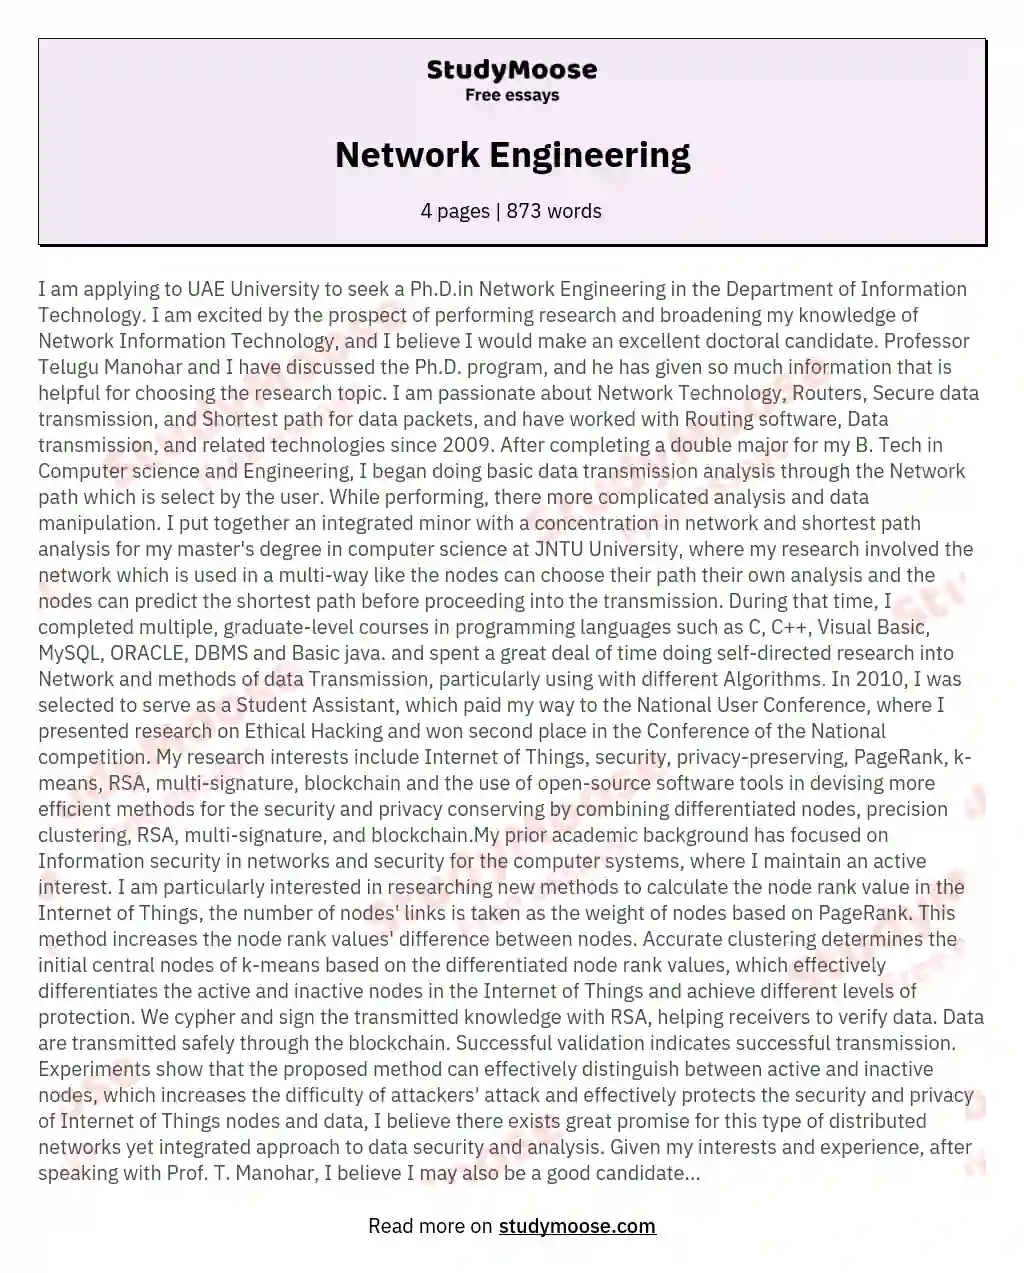 Network Engineering essay